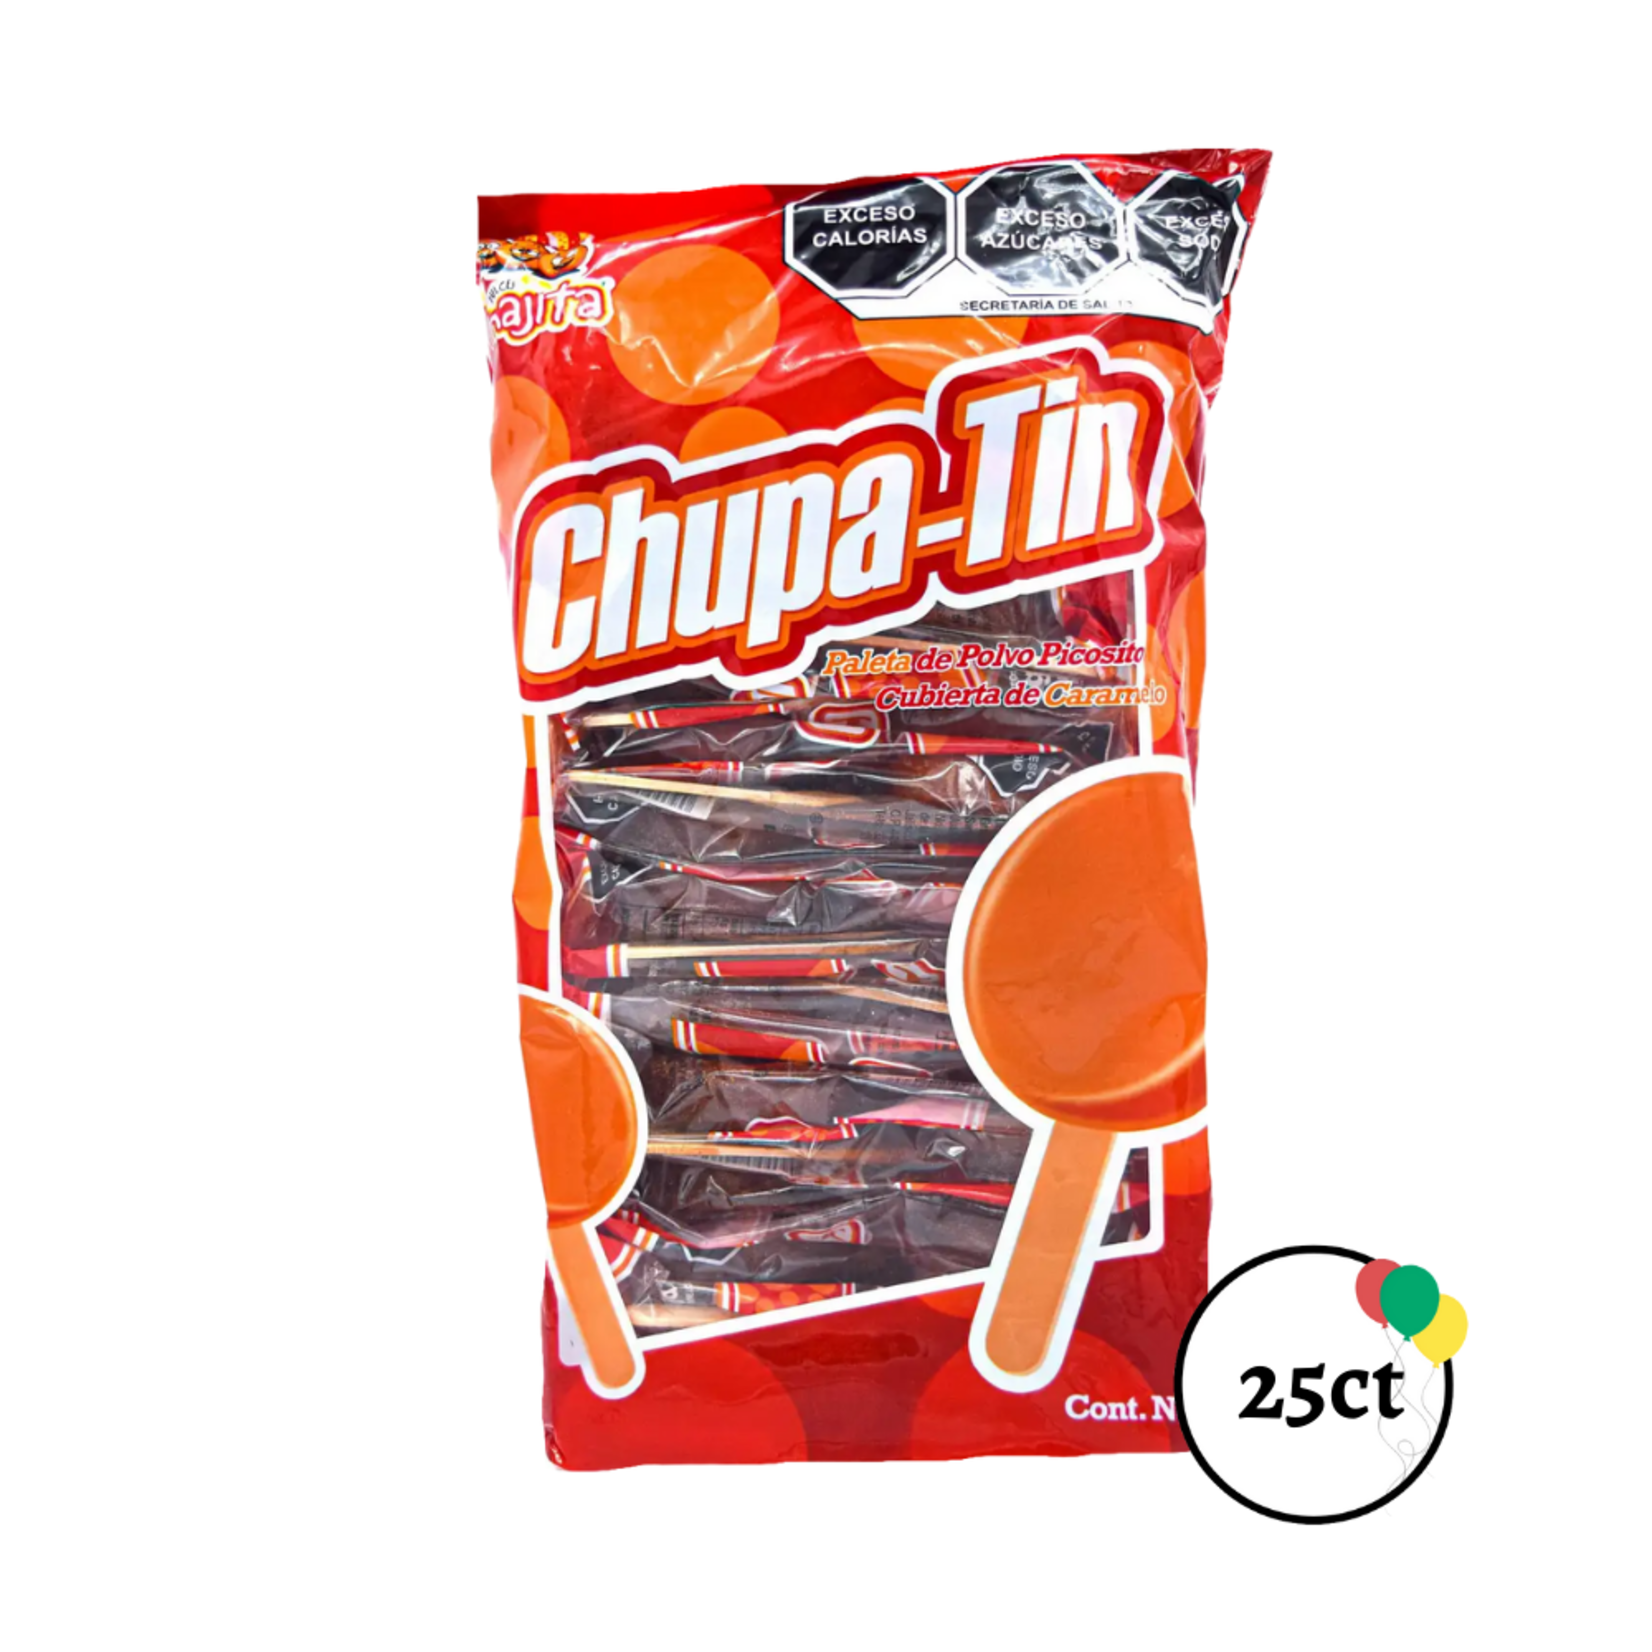 Tinajita Chupa-Tin Chile 25ct